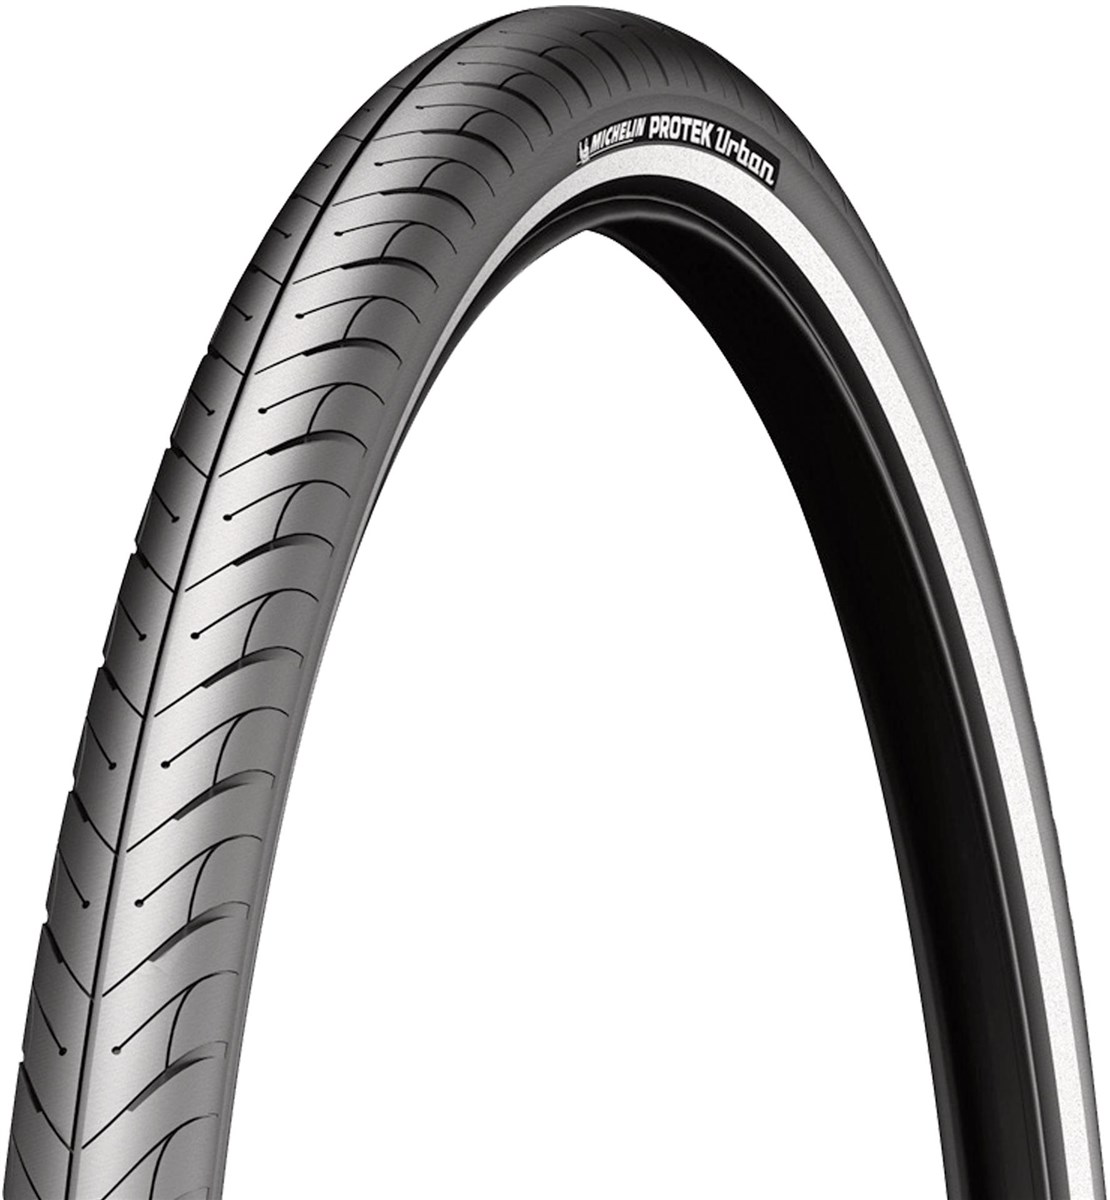 Michelin Protek Urban 700c Tyre product image